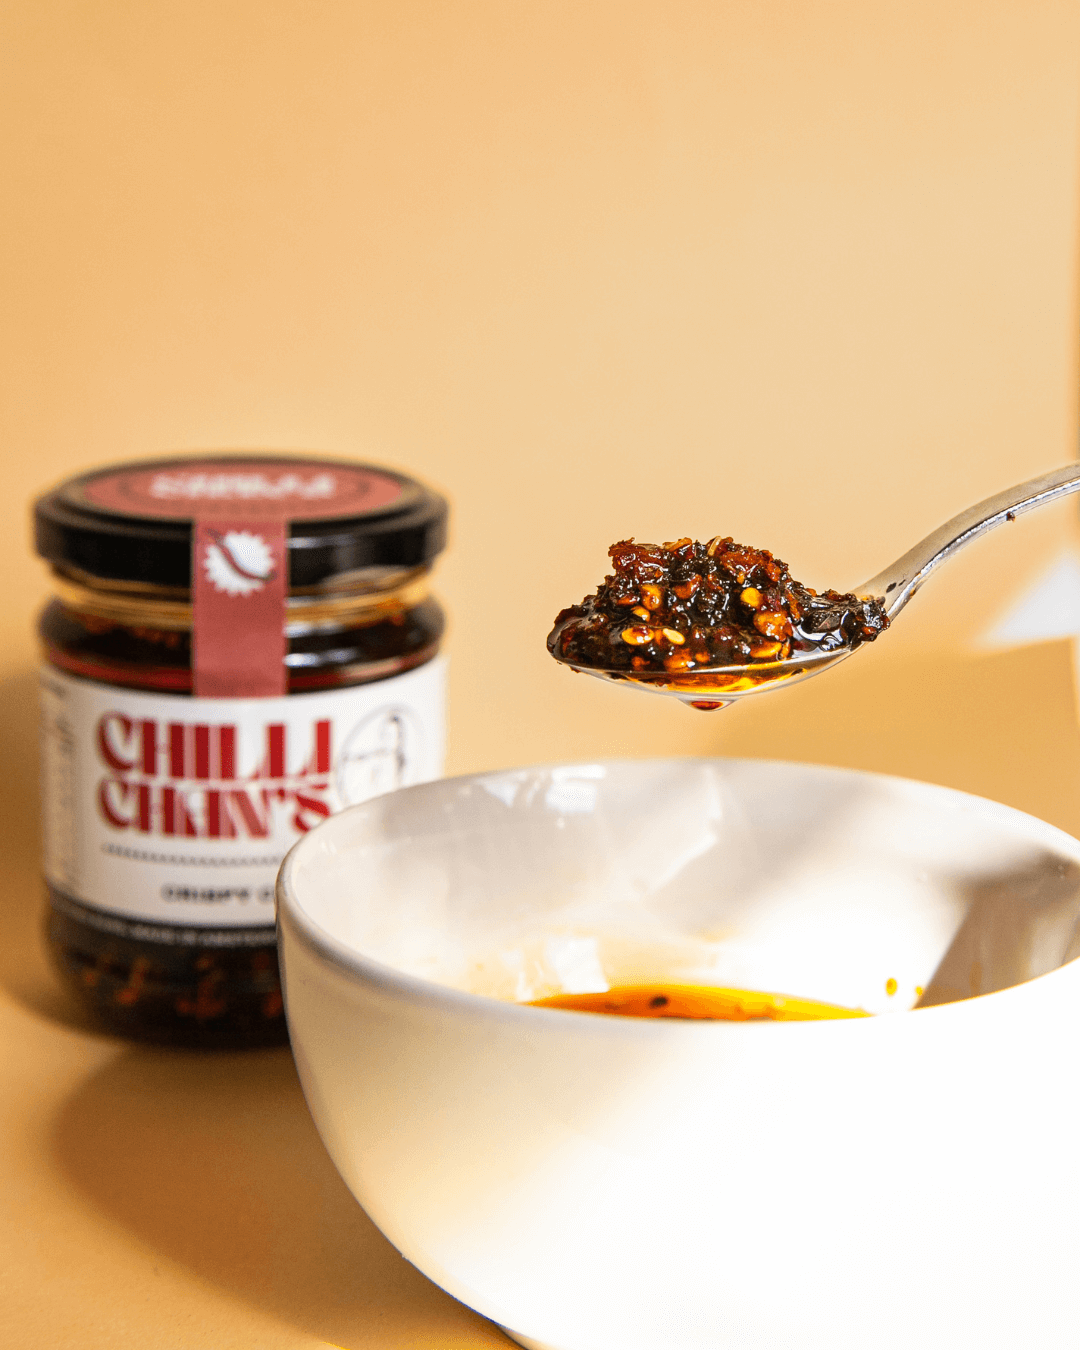 Crispy Chilli Oil, 200ml